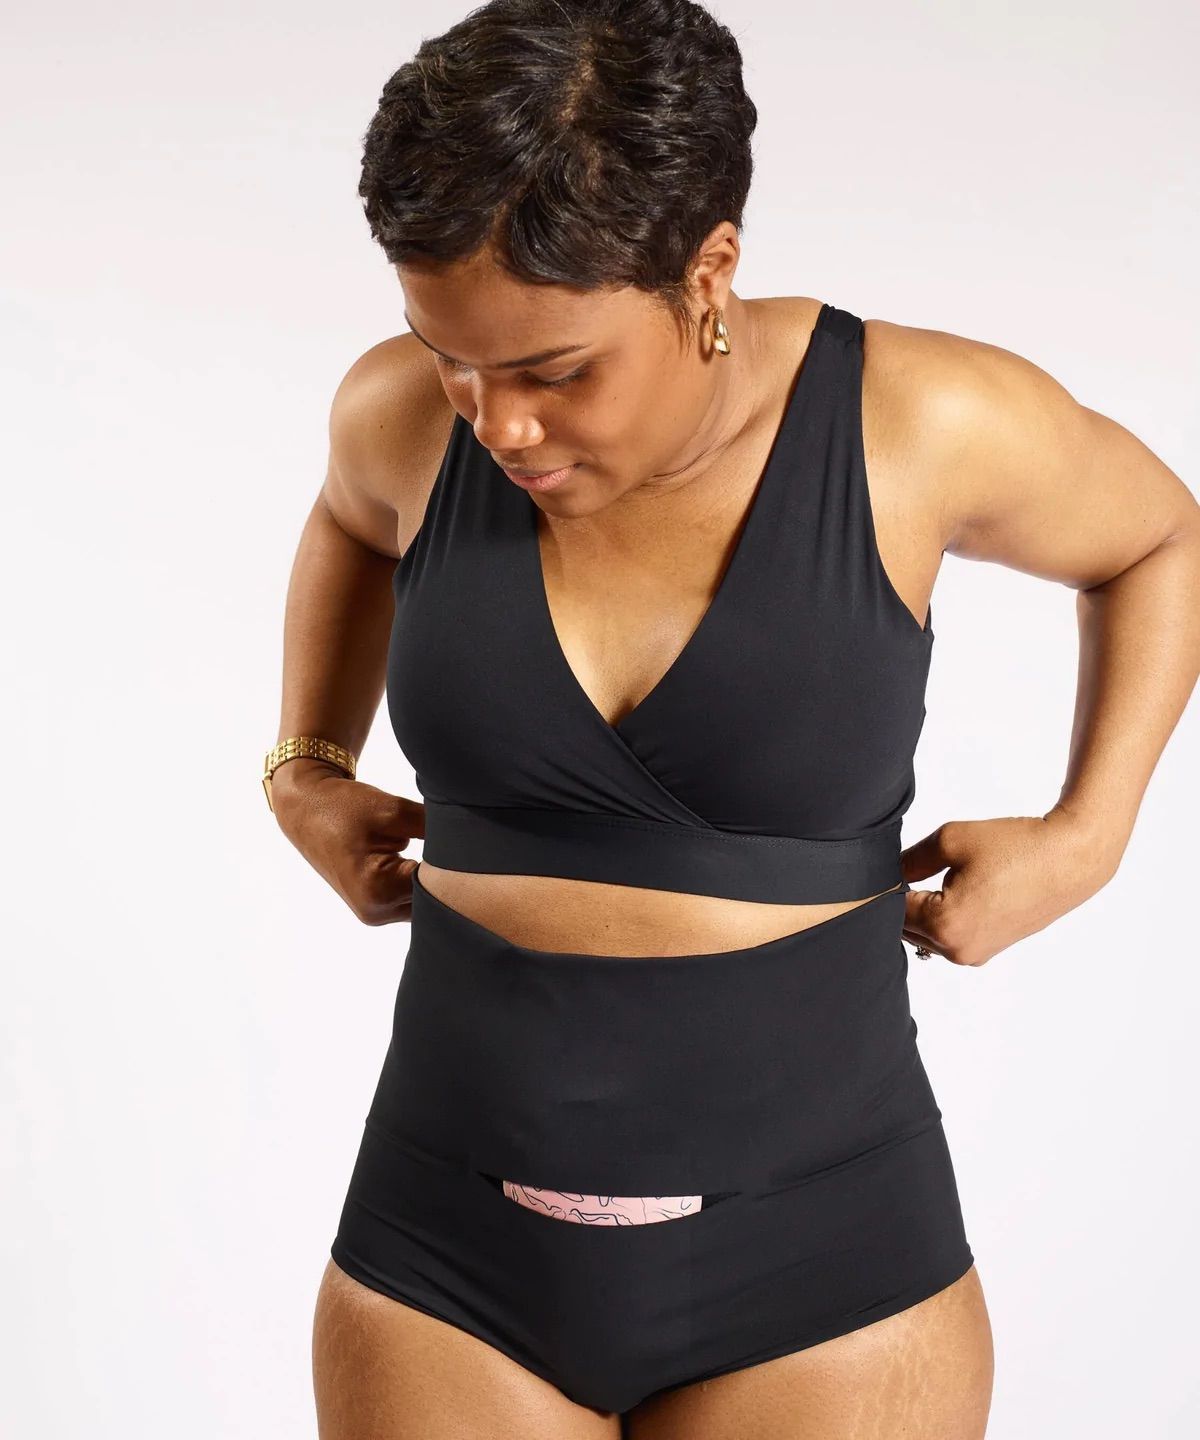 Nyssa – FourthWear Postpartum Recovery Underwear